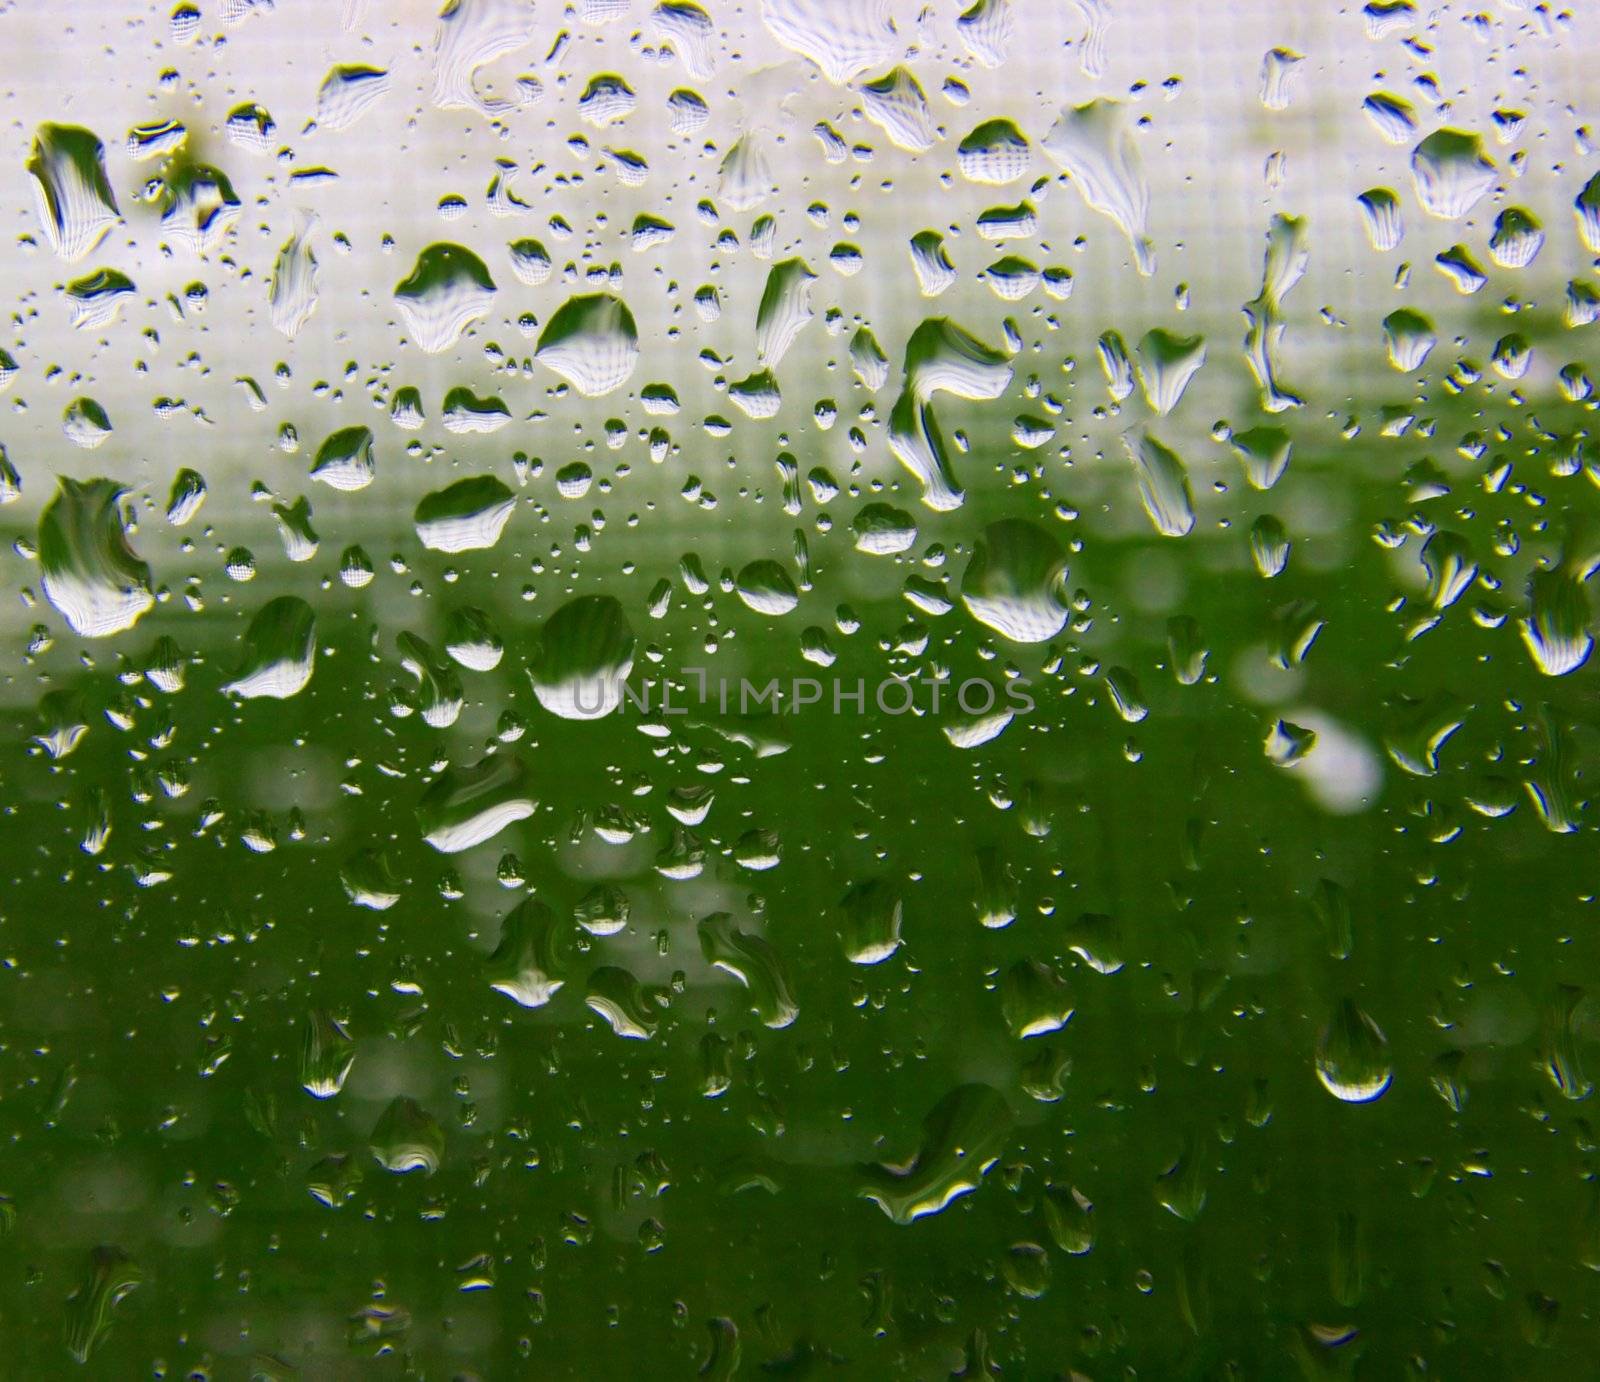 Many raindrops on the window surface